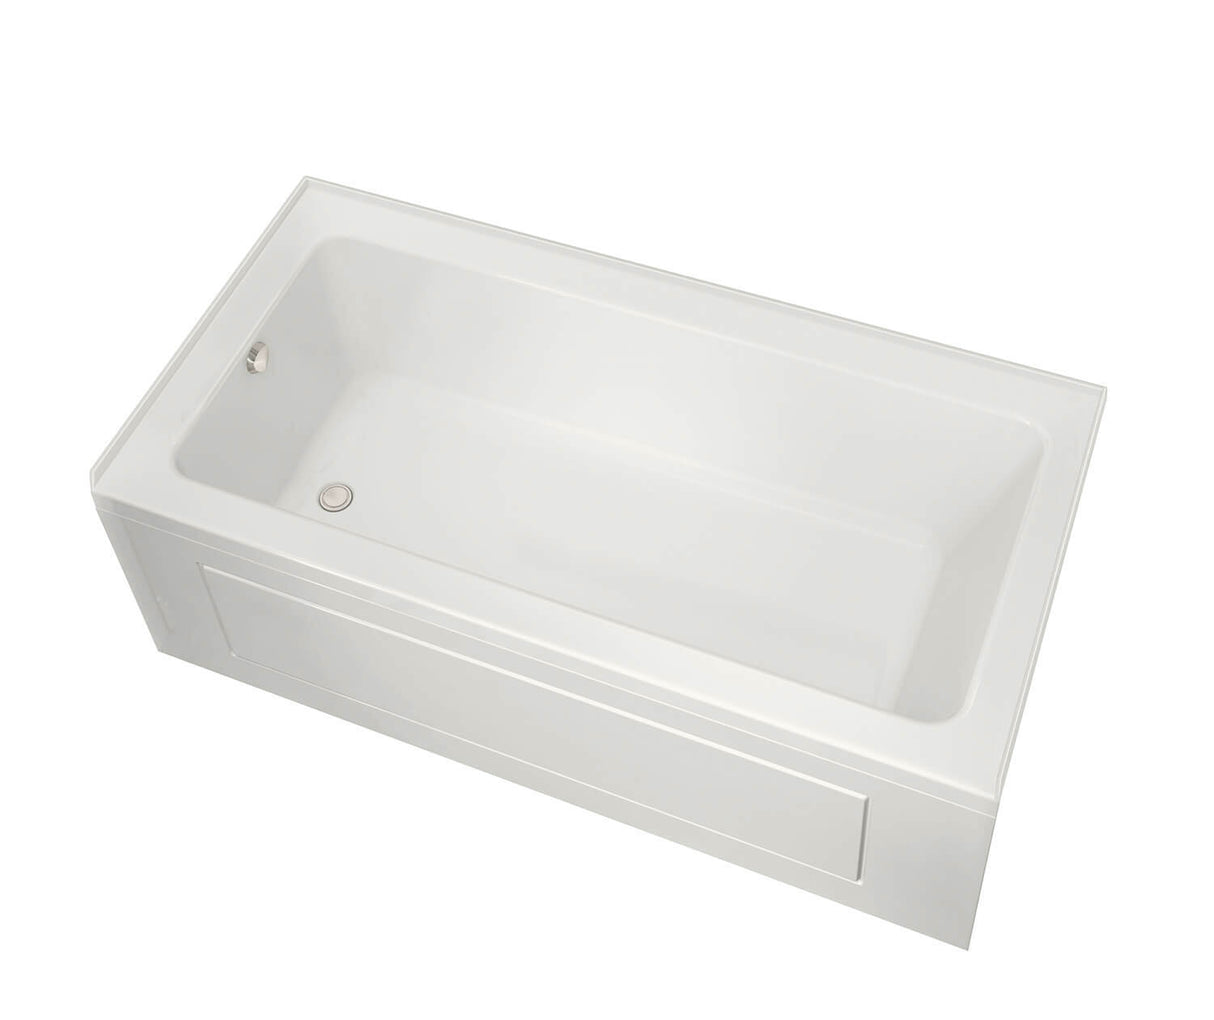 MAAX 106201-R-097-001 Pose 6032 IF Acrylic Alcove Right-Hand Drain Combined Whirlpool & Aeroeffect Bathtub in White